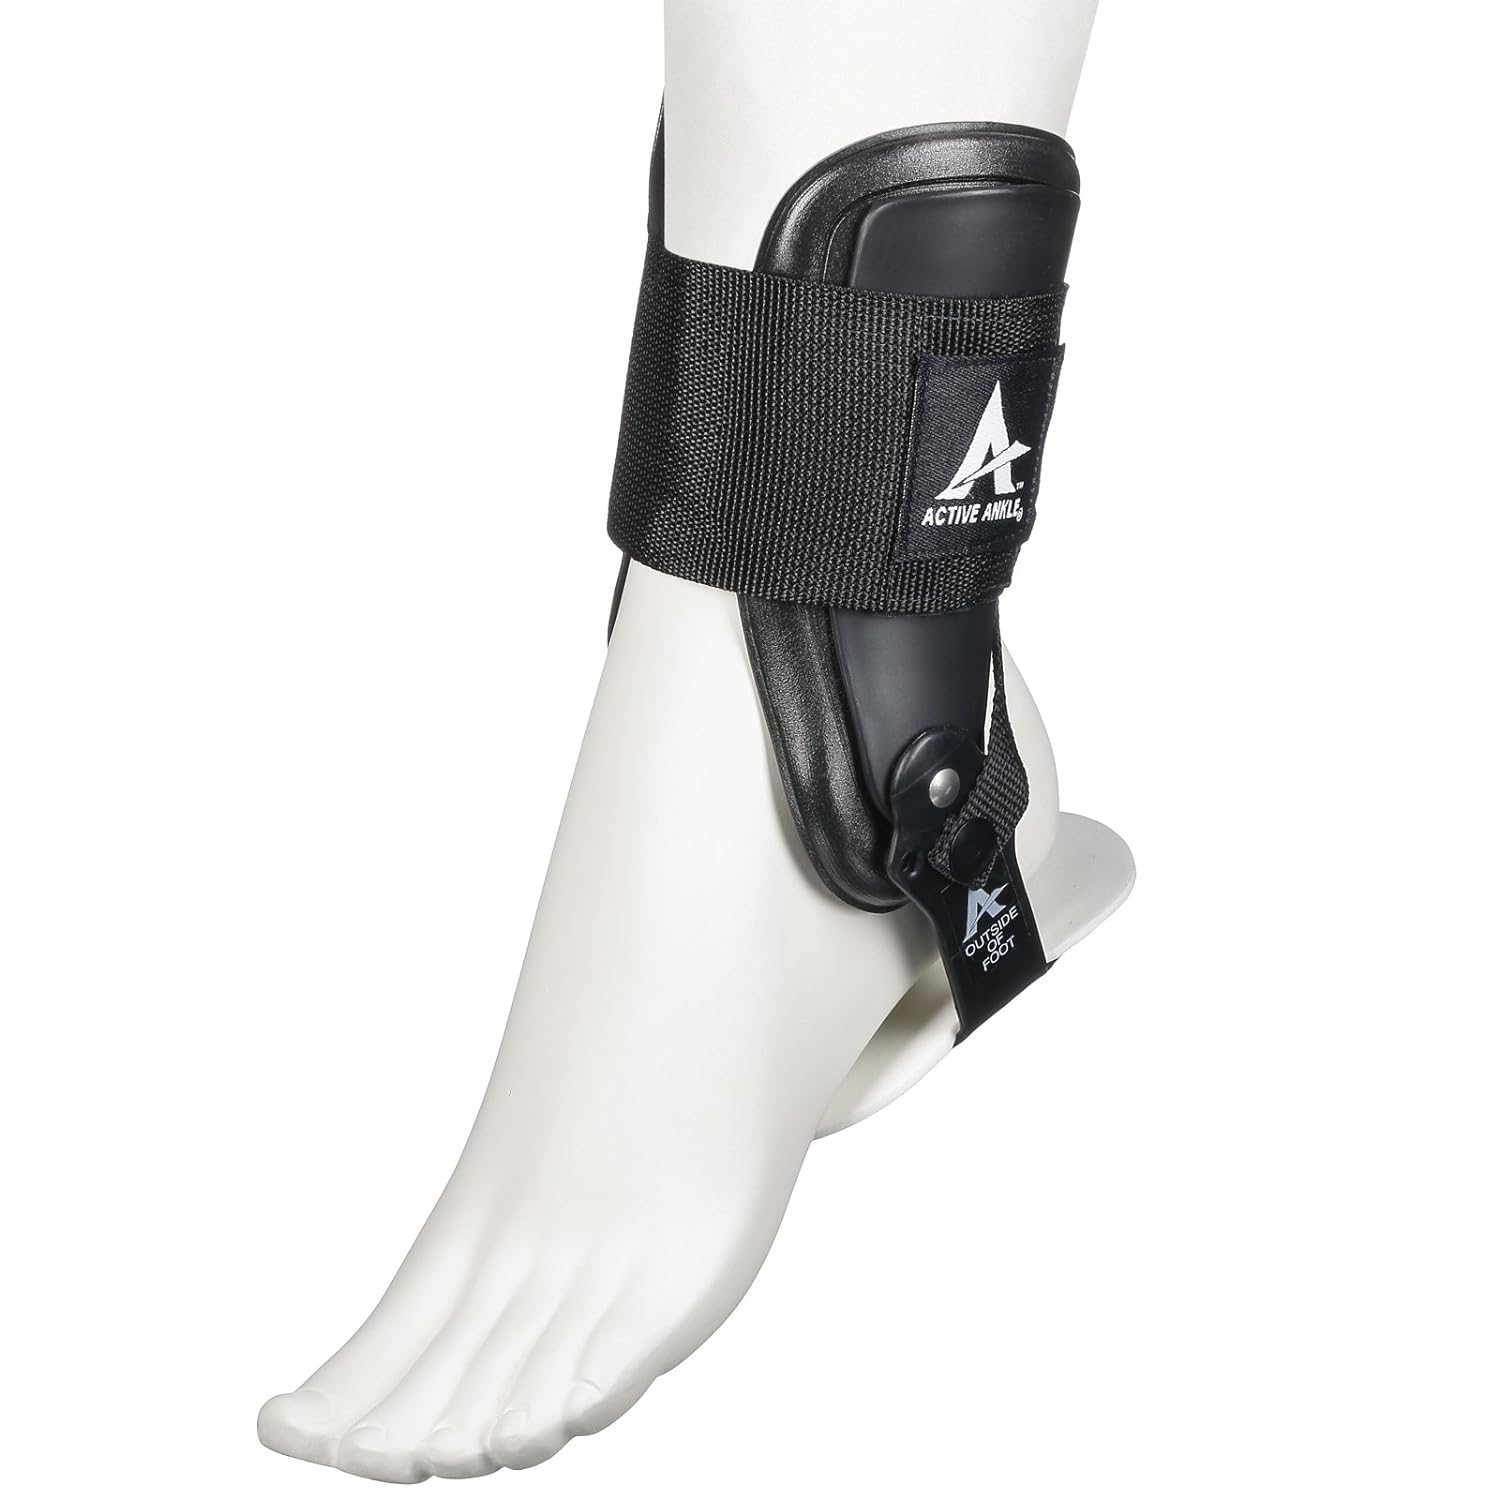 Active Ankle T2 Rigid Ankle Brace, Black, Medium - image 1 of 6